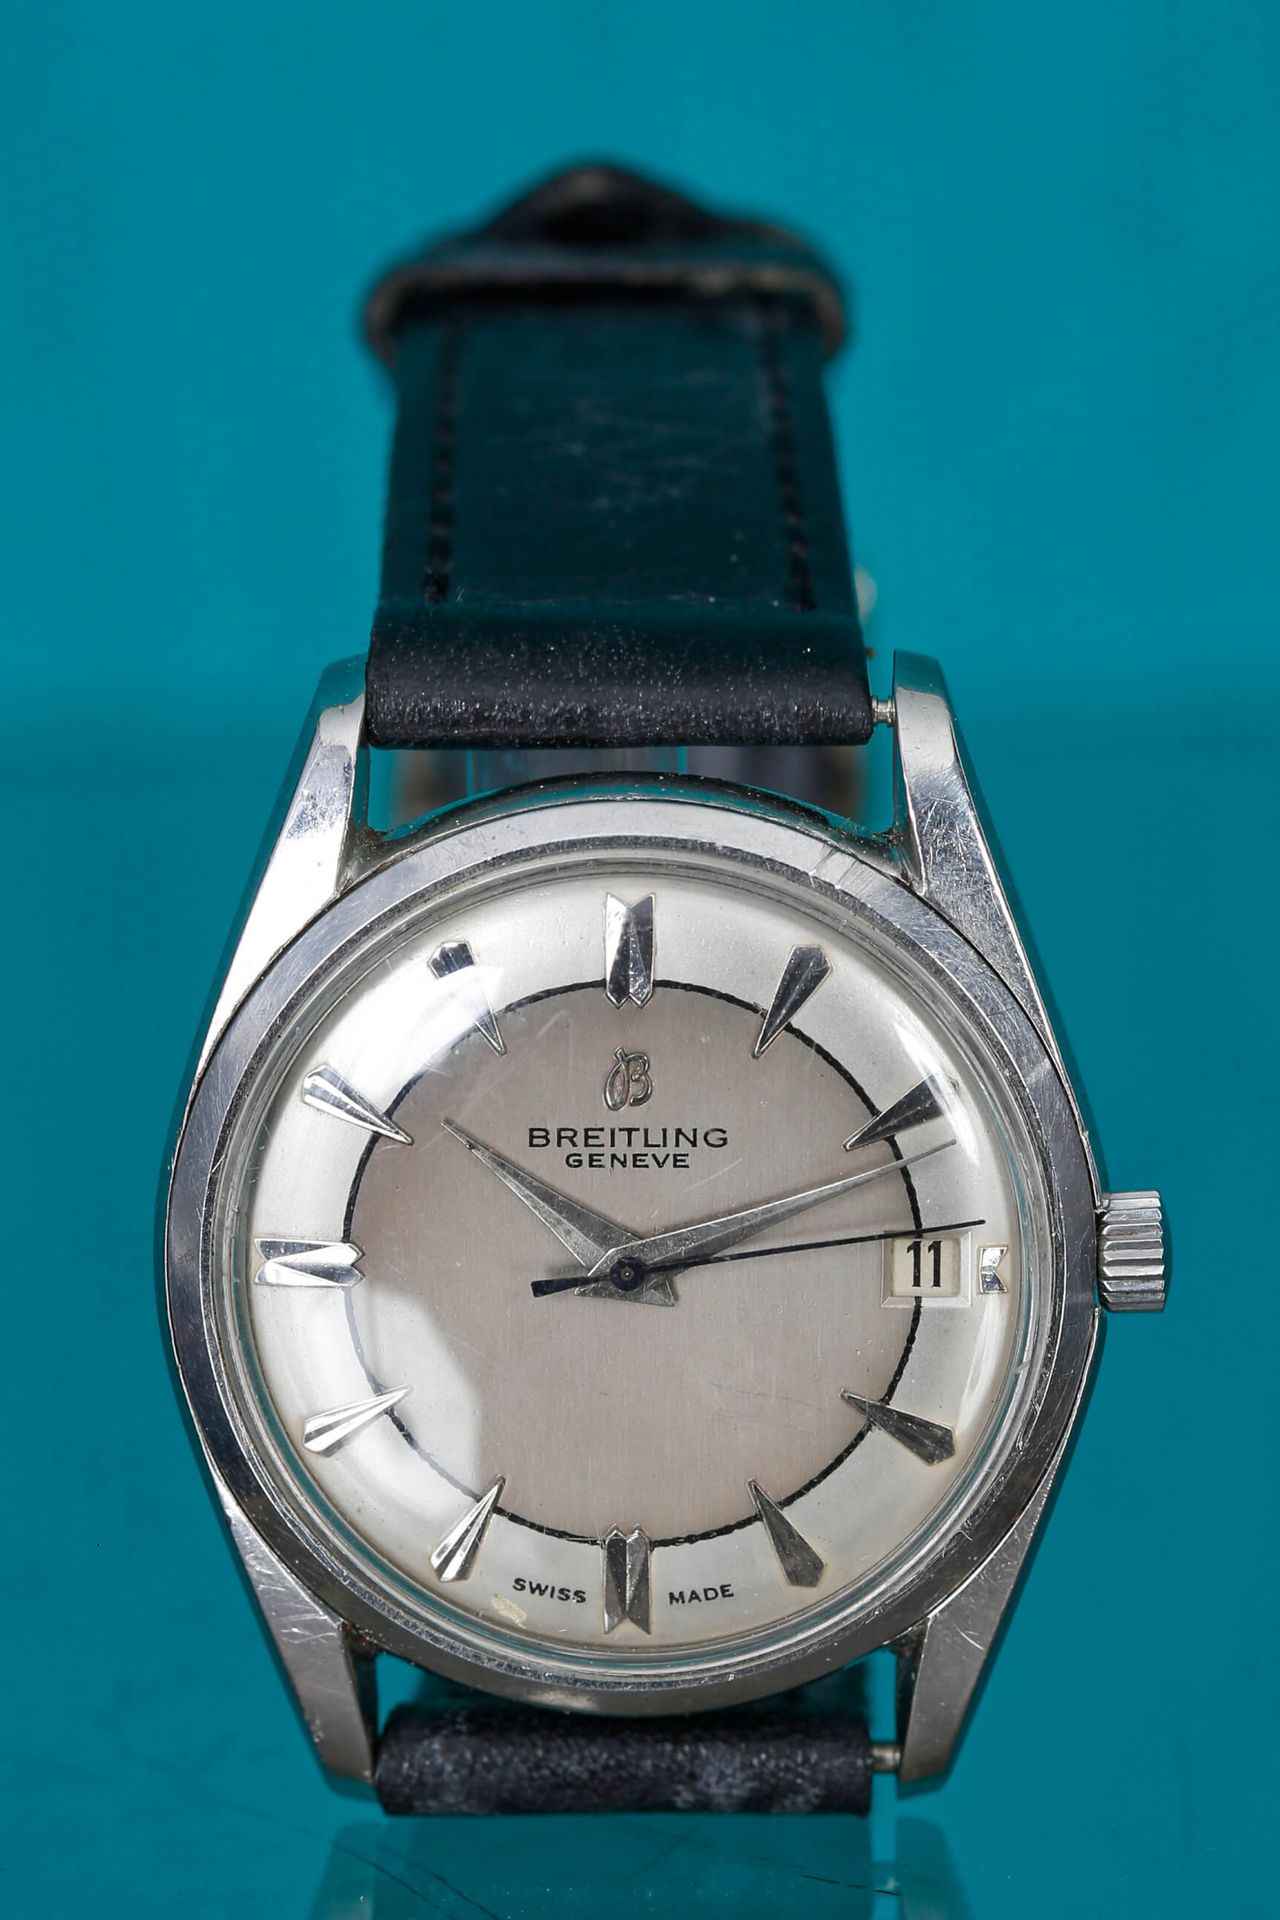 Breitling - Wittnauer - Jaeger 3 montres > Breitling, Uhr ref. 4001, um 1960

St&hellip;